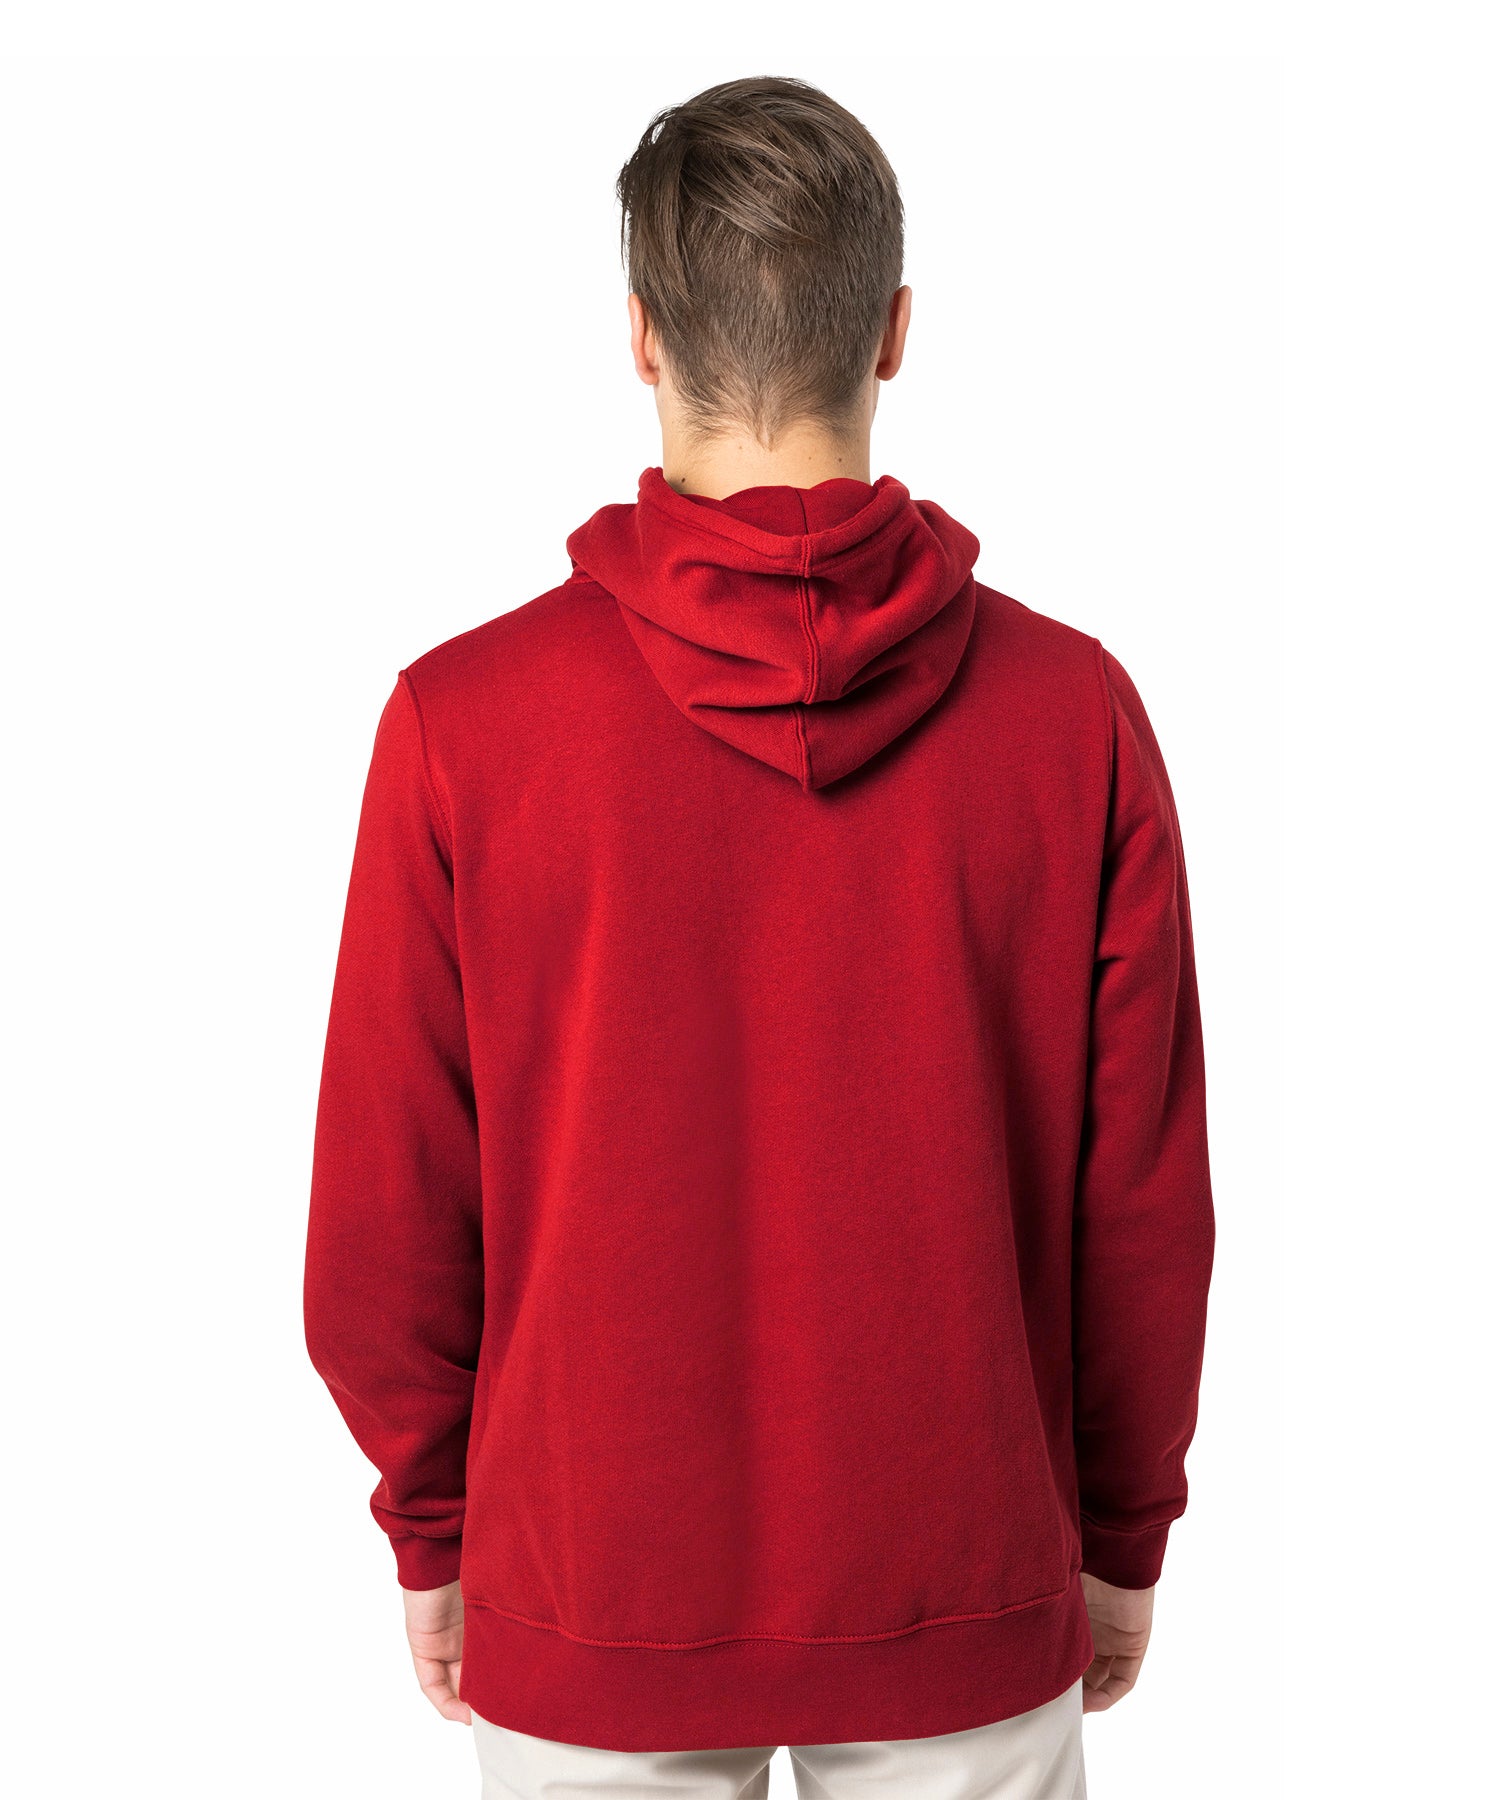 Premium Plain Cotton Red Hoodie/Sweatshirt